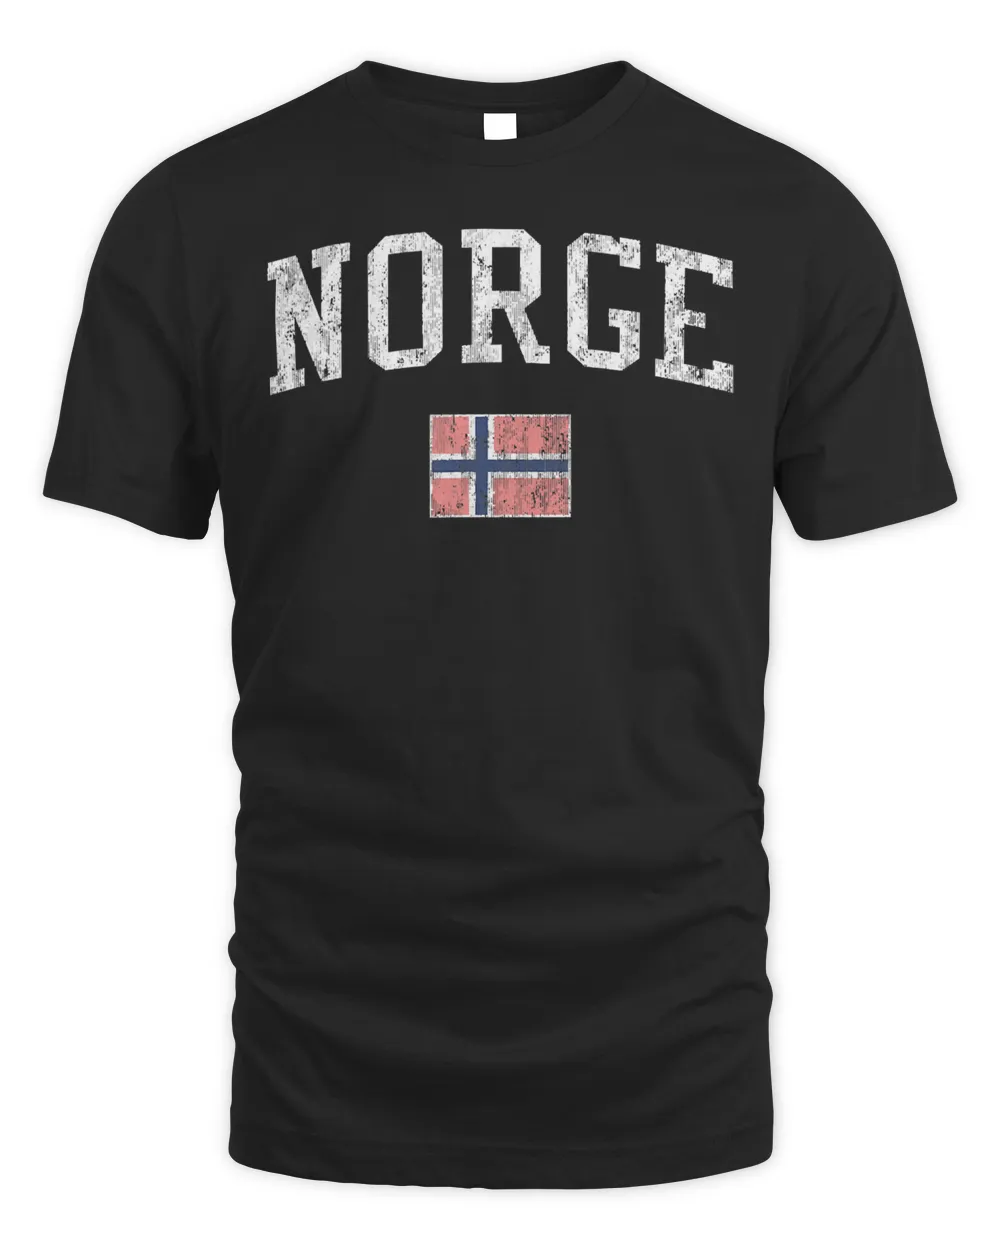 Norway T-Shirt Vintage Sports Design Norge Norwegian Tee